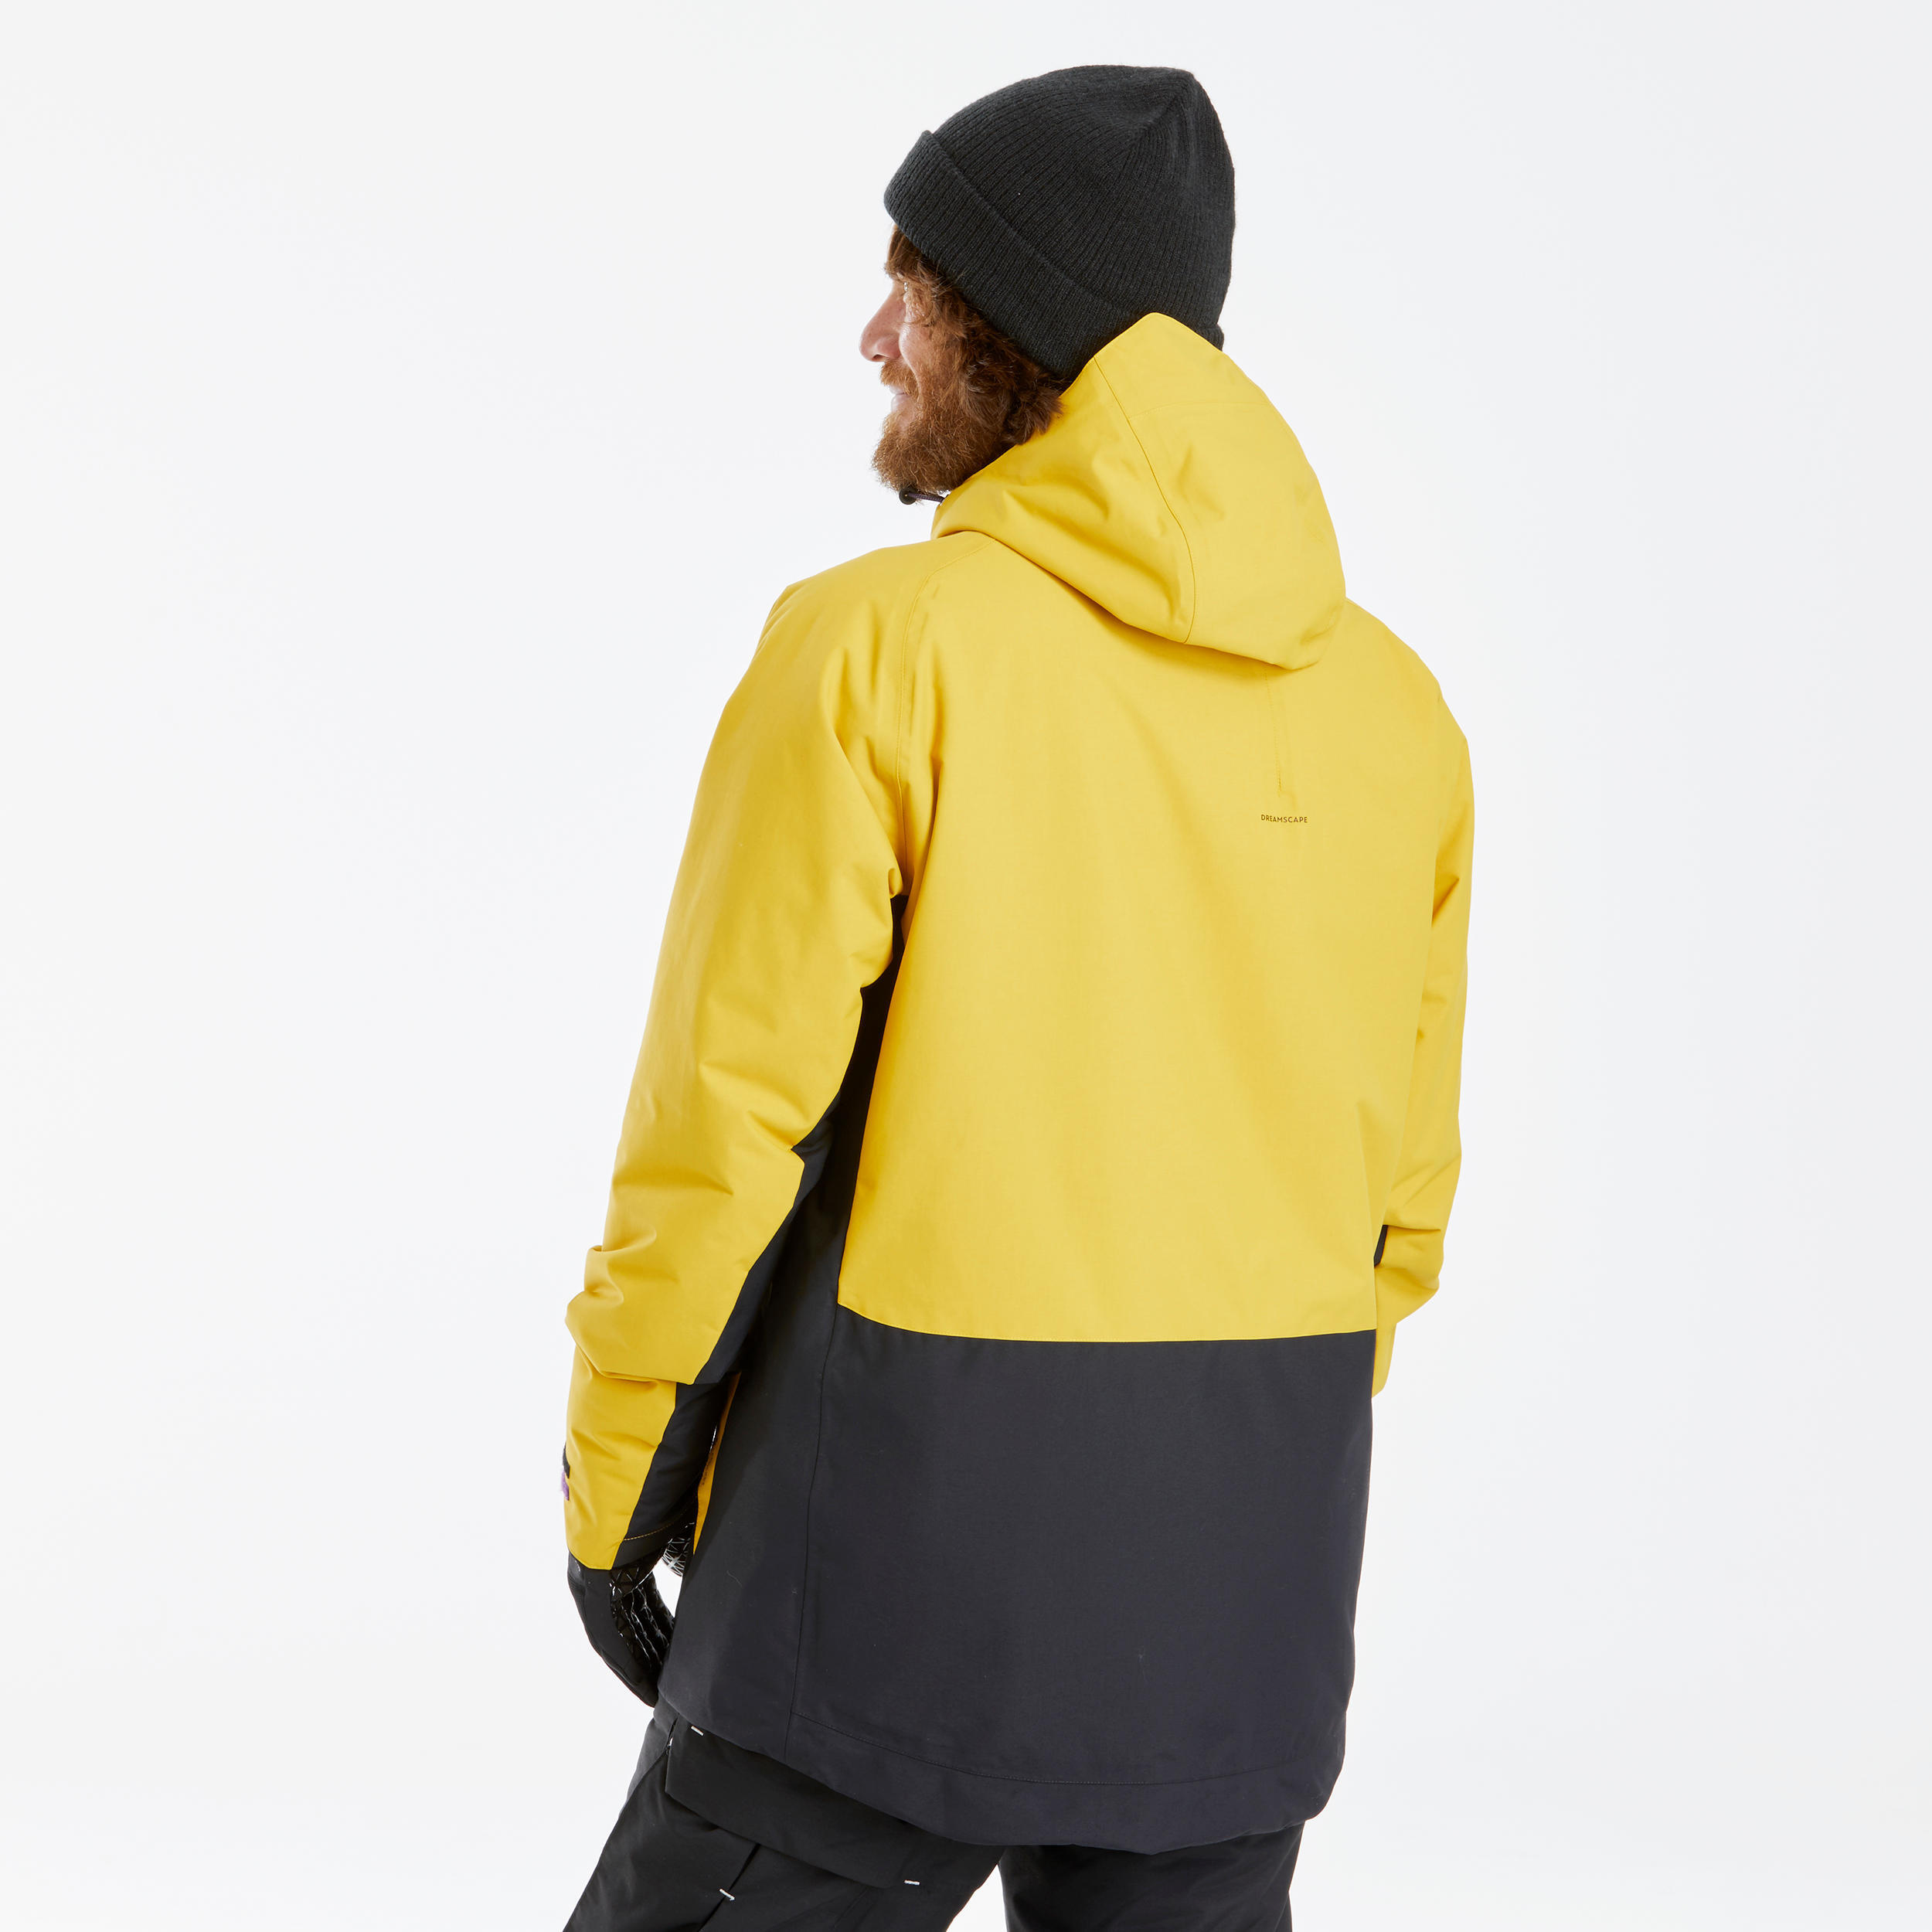 Men's Snowboard Jacket - SNB 100 Yellow 6/13